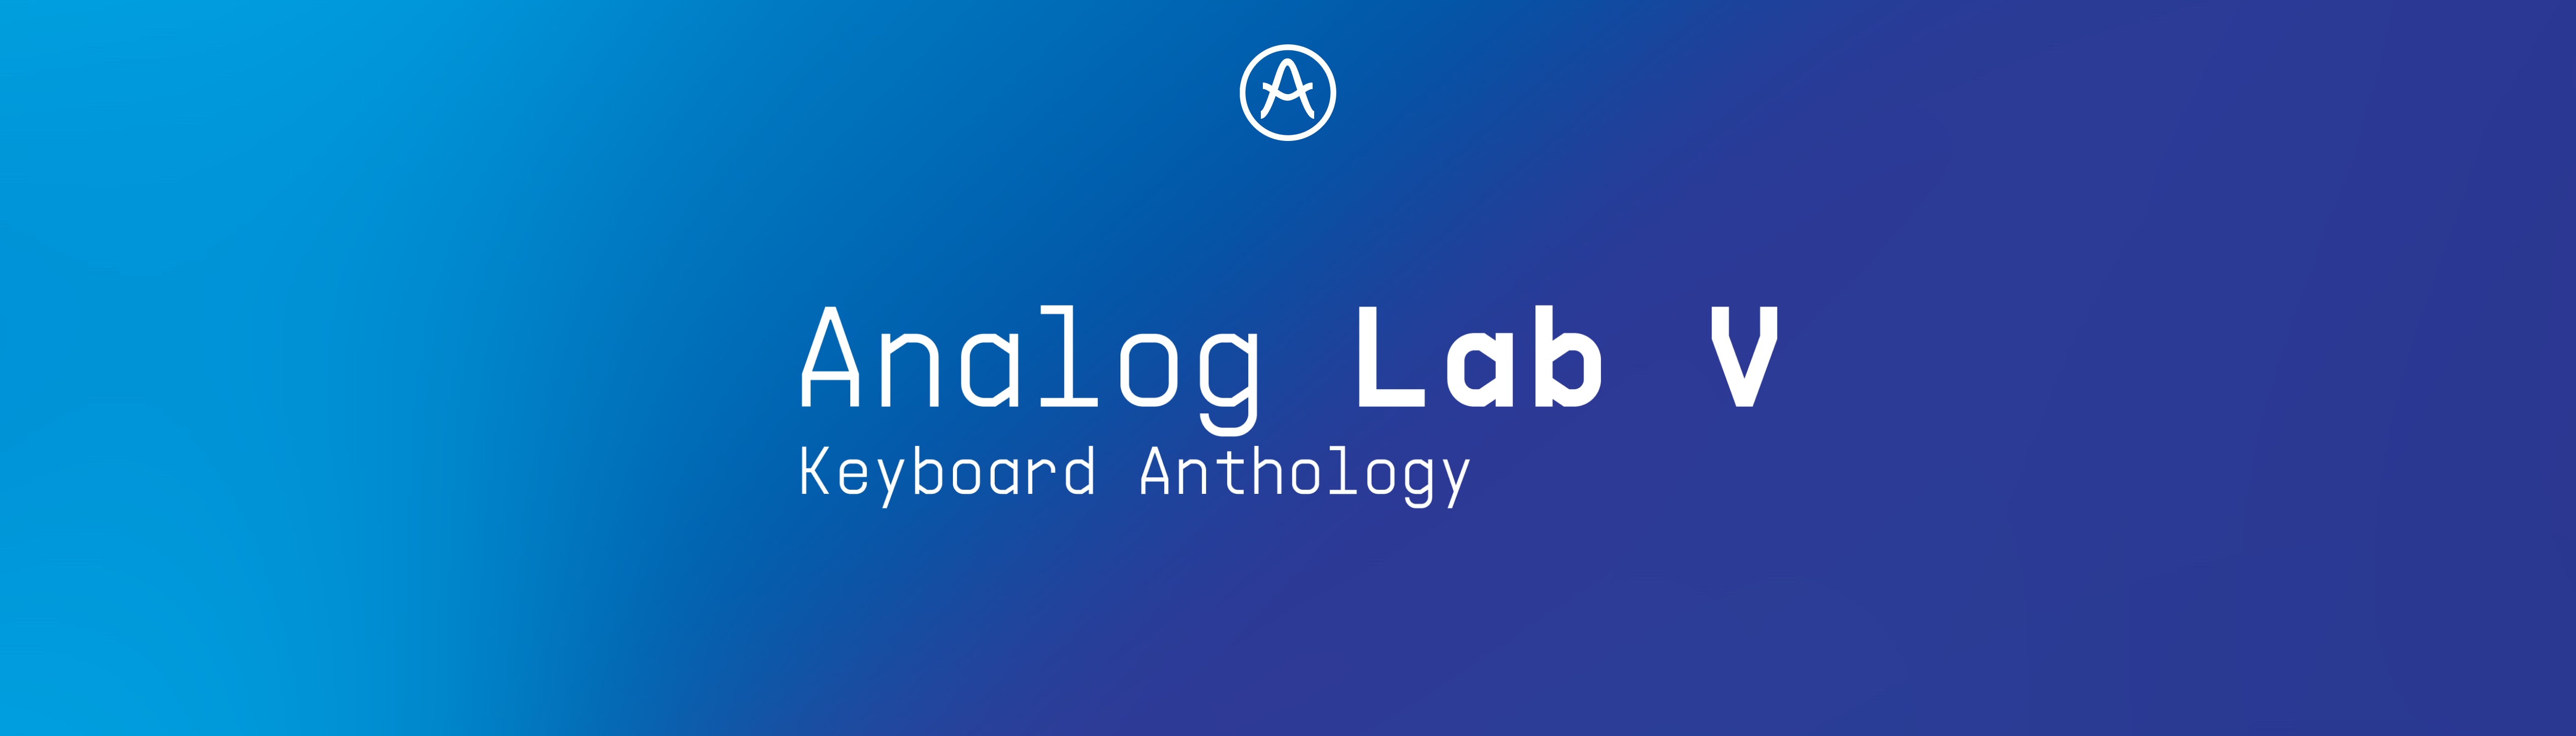 Arturia Analog lab V download the new version